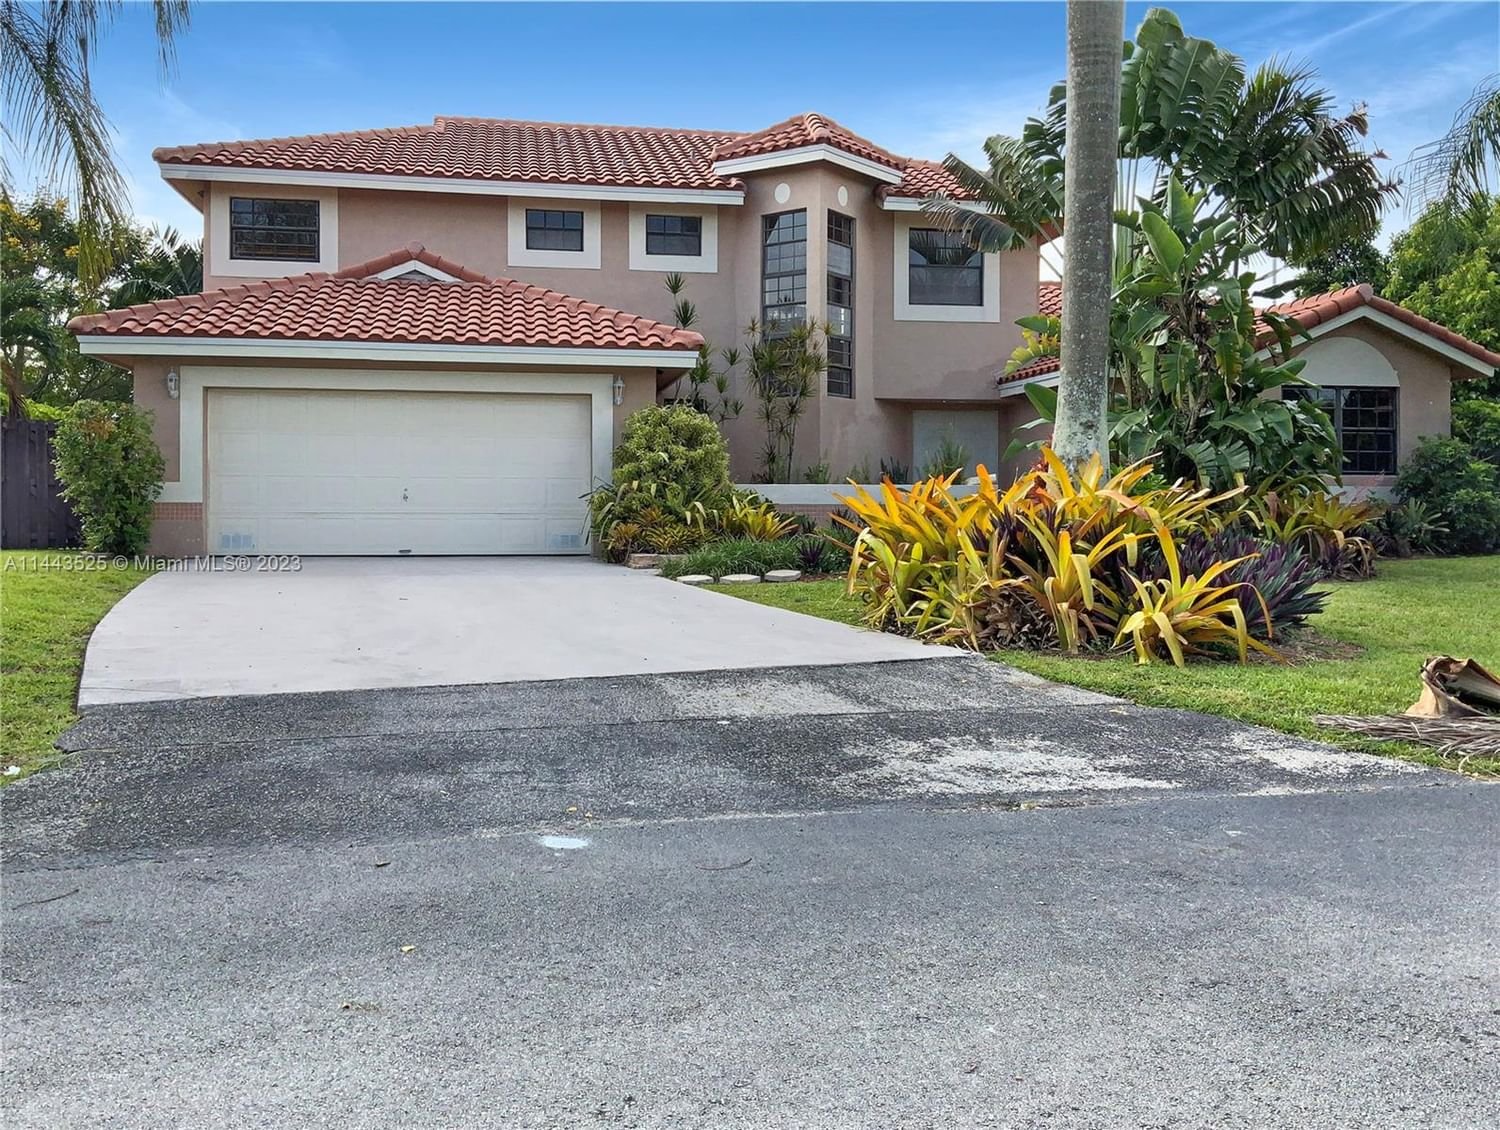 Real estate property located at 15522 55th Ter, Miami-Dade County, Miami, FL